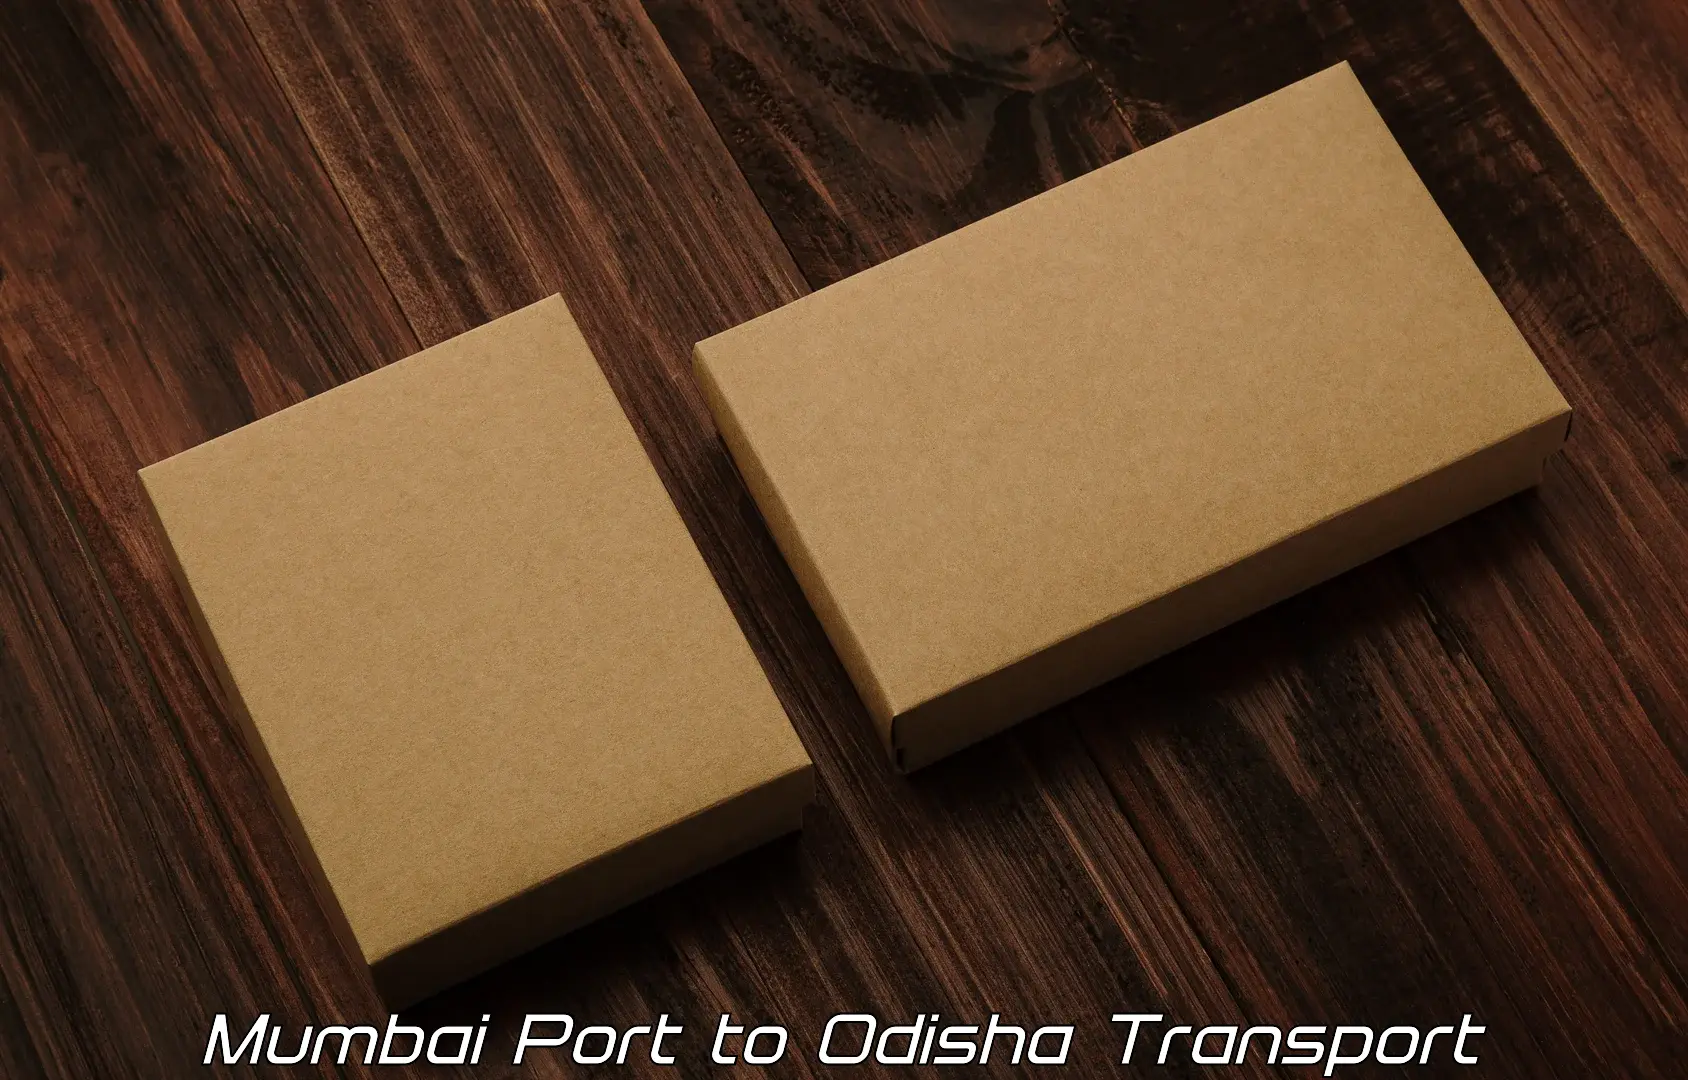 Furniture transport service Mumbai Port to Saintala